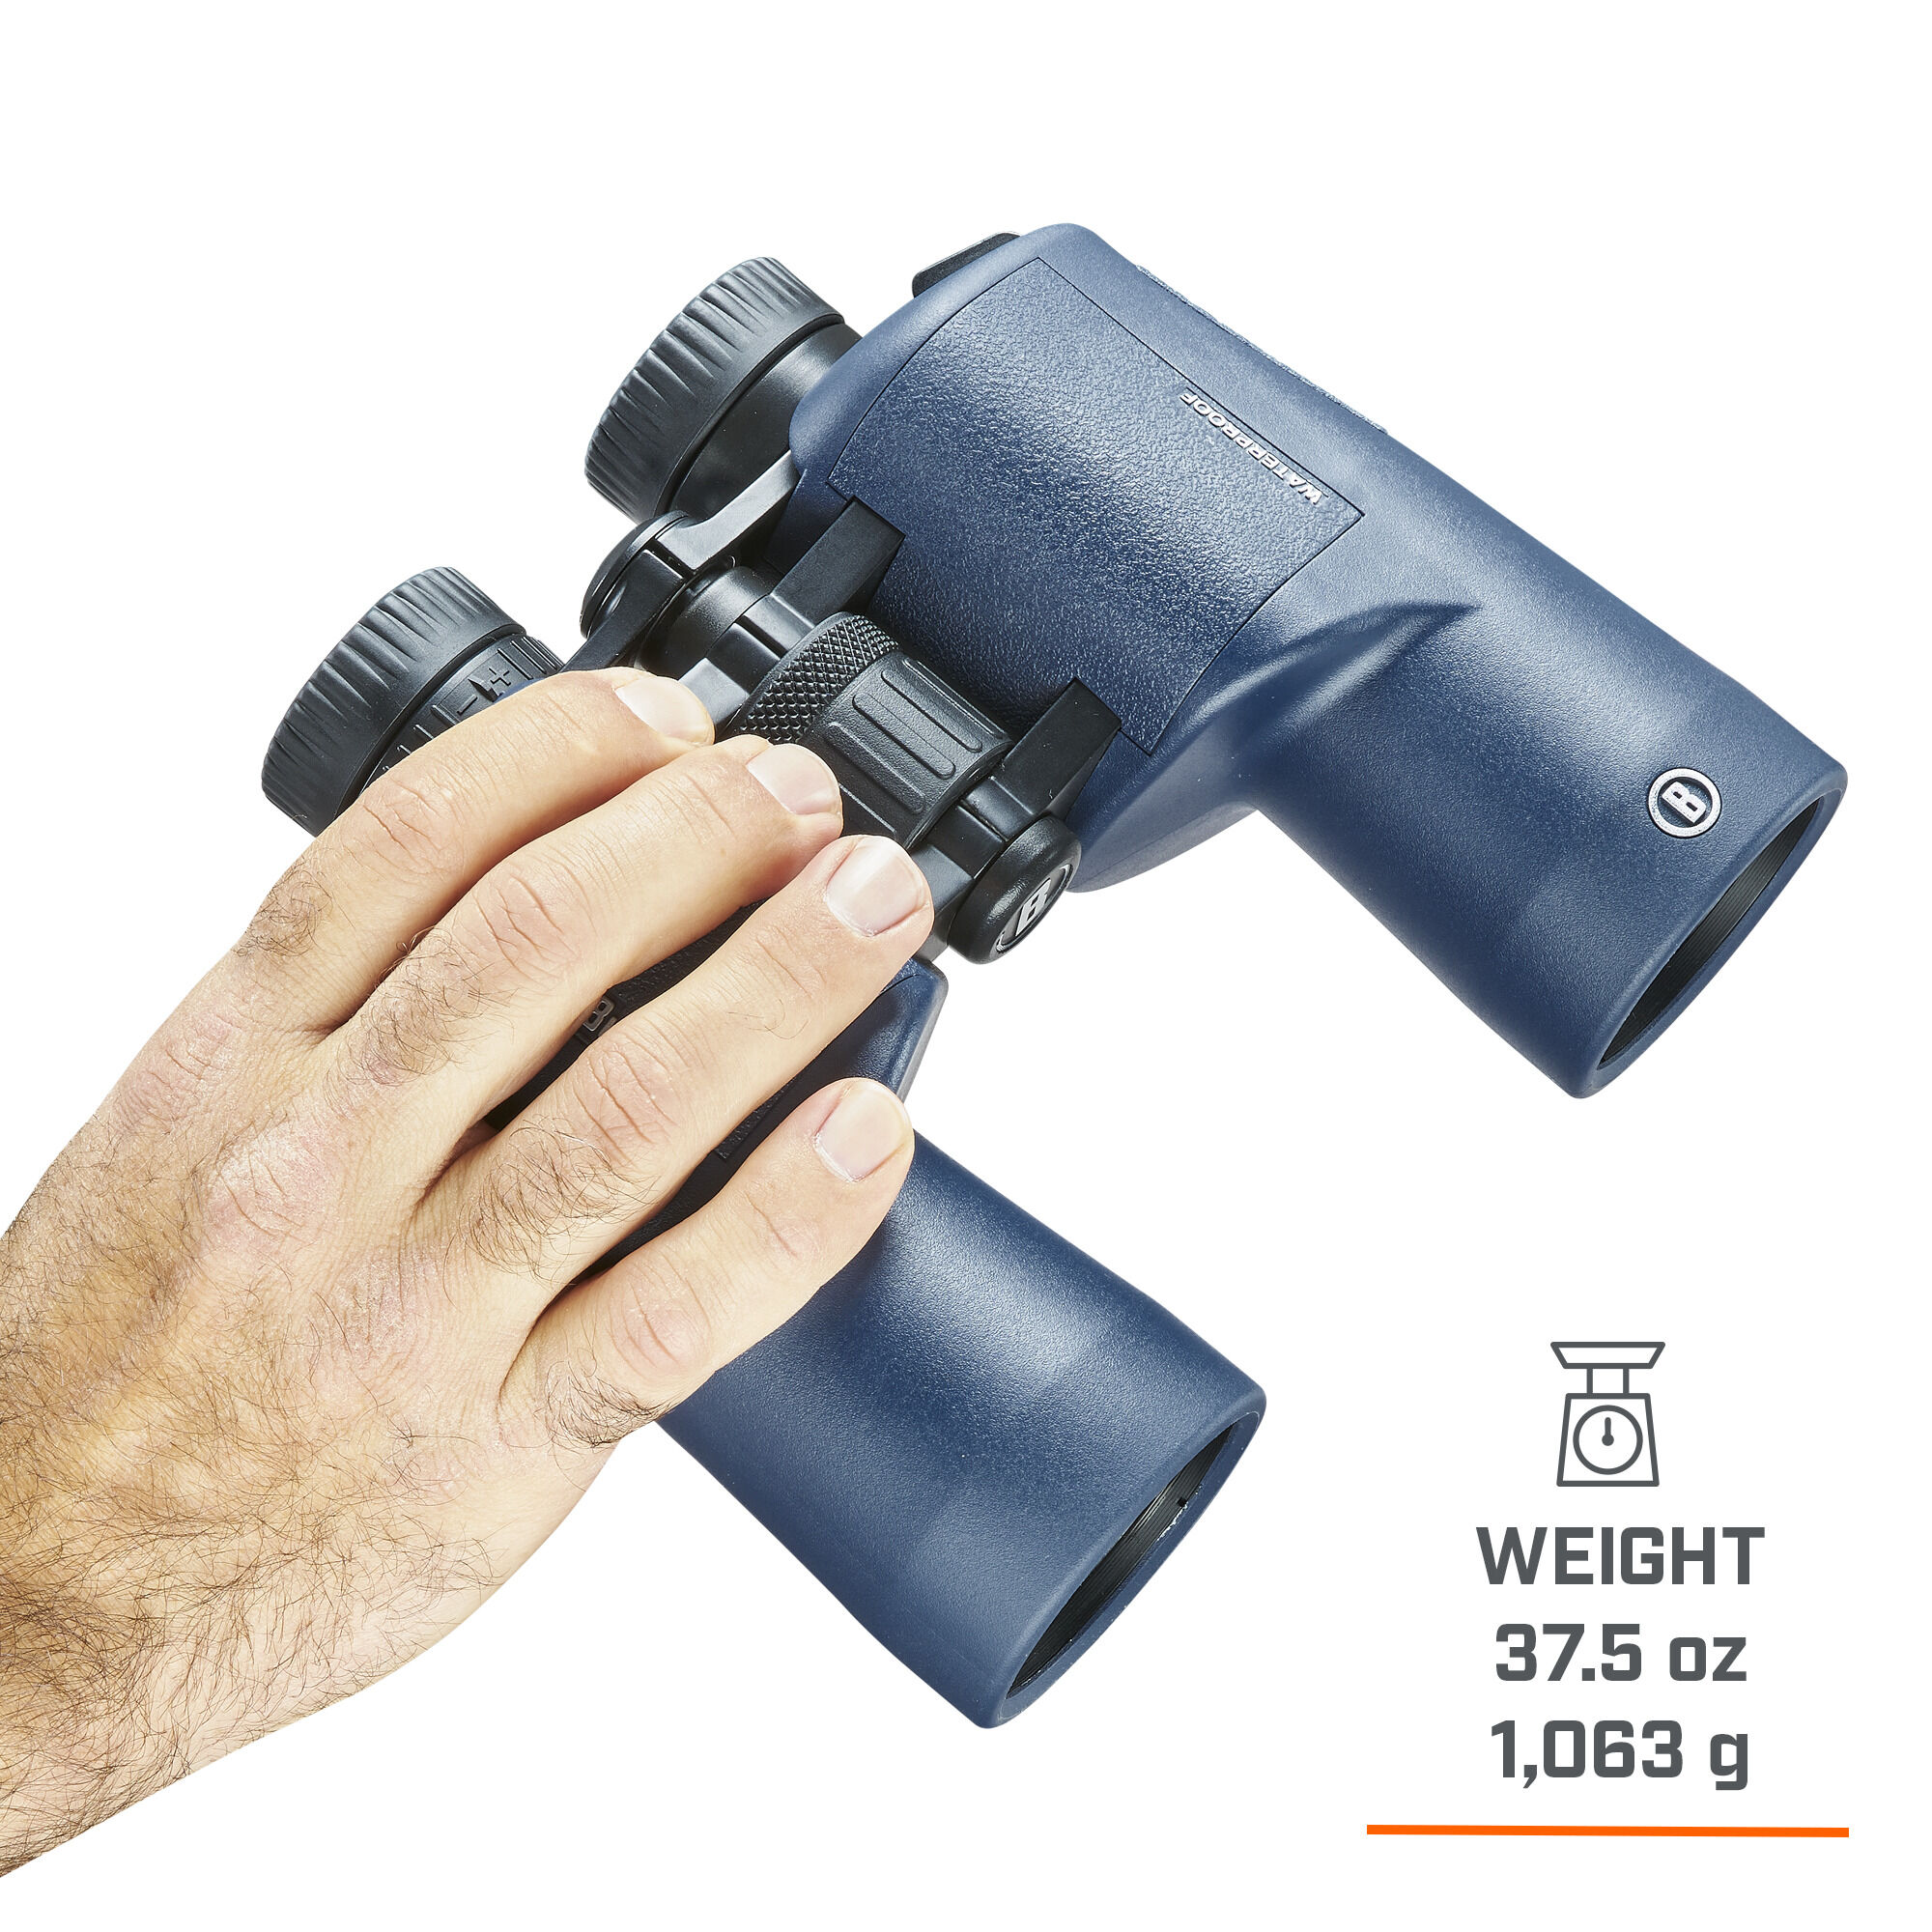 H20 Porro Prism Water Resistant Binoculars, 7x50 Magnification